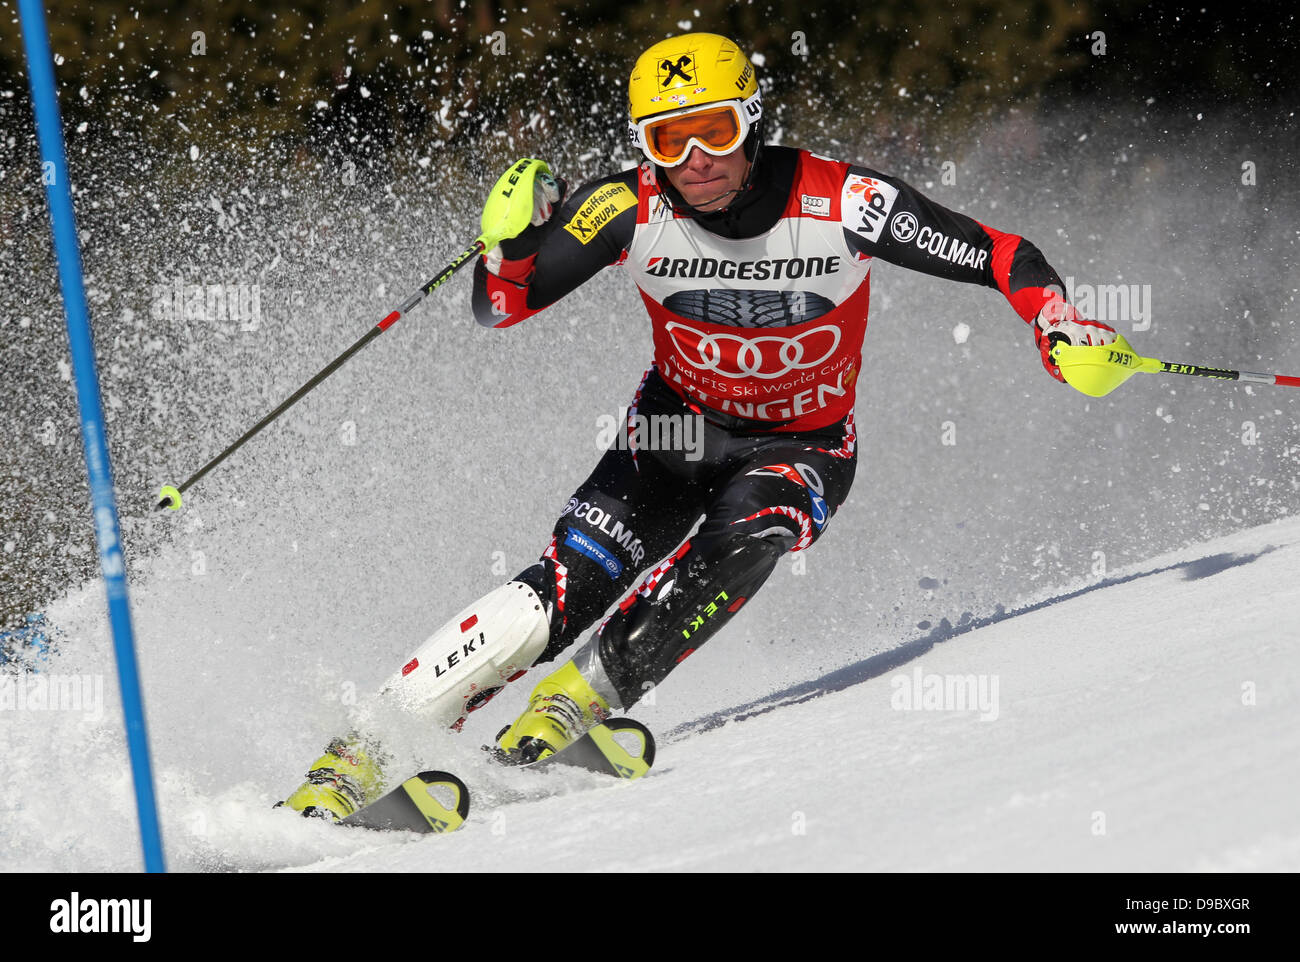 Ivica Kostelic Audi FIS Alpine Ski World Cup Kitzbühel, Österreich - 25.01.12 Stockfoto